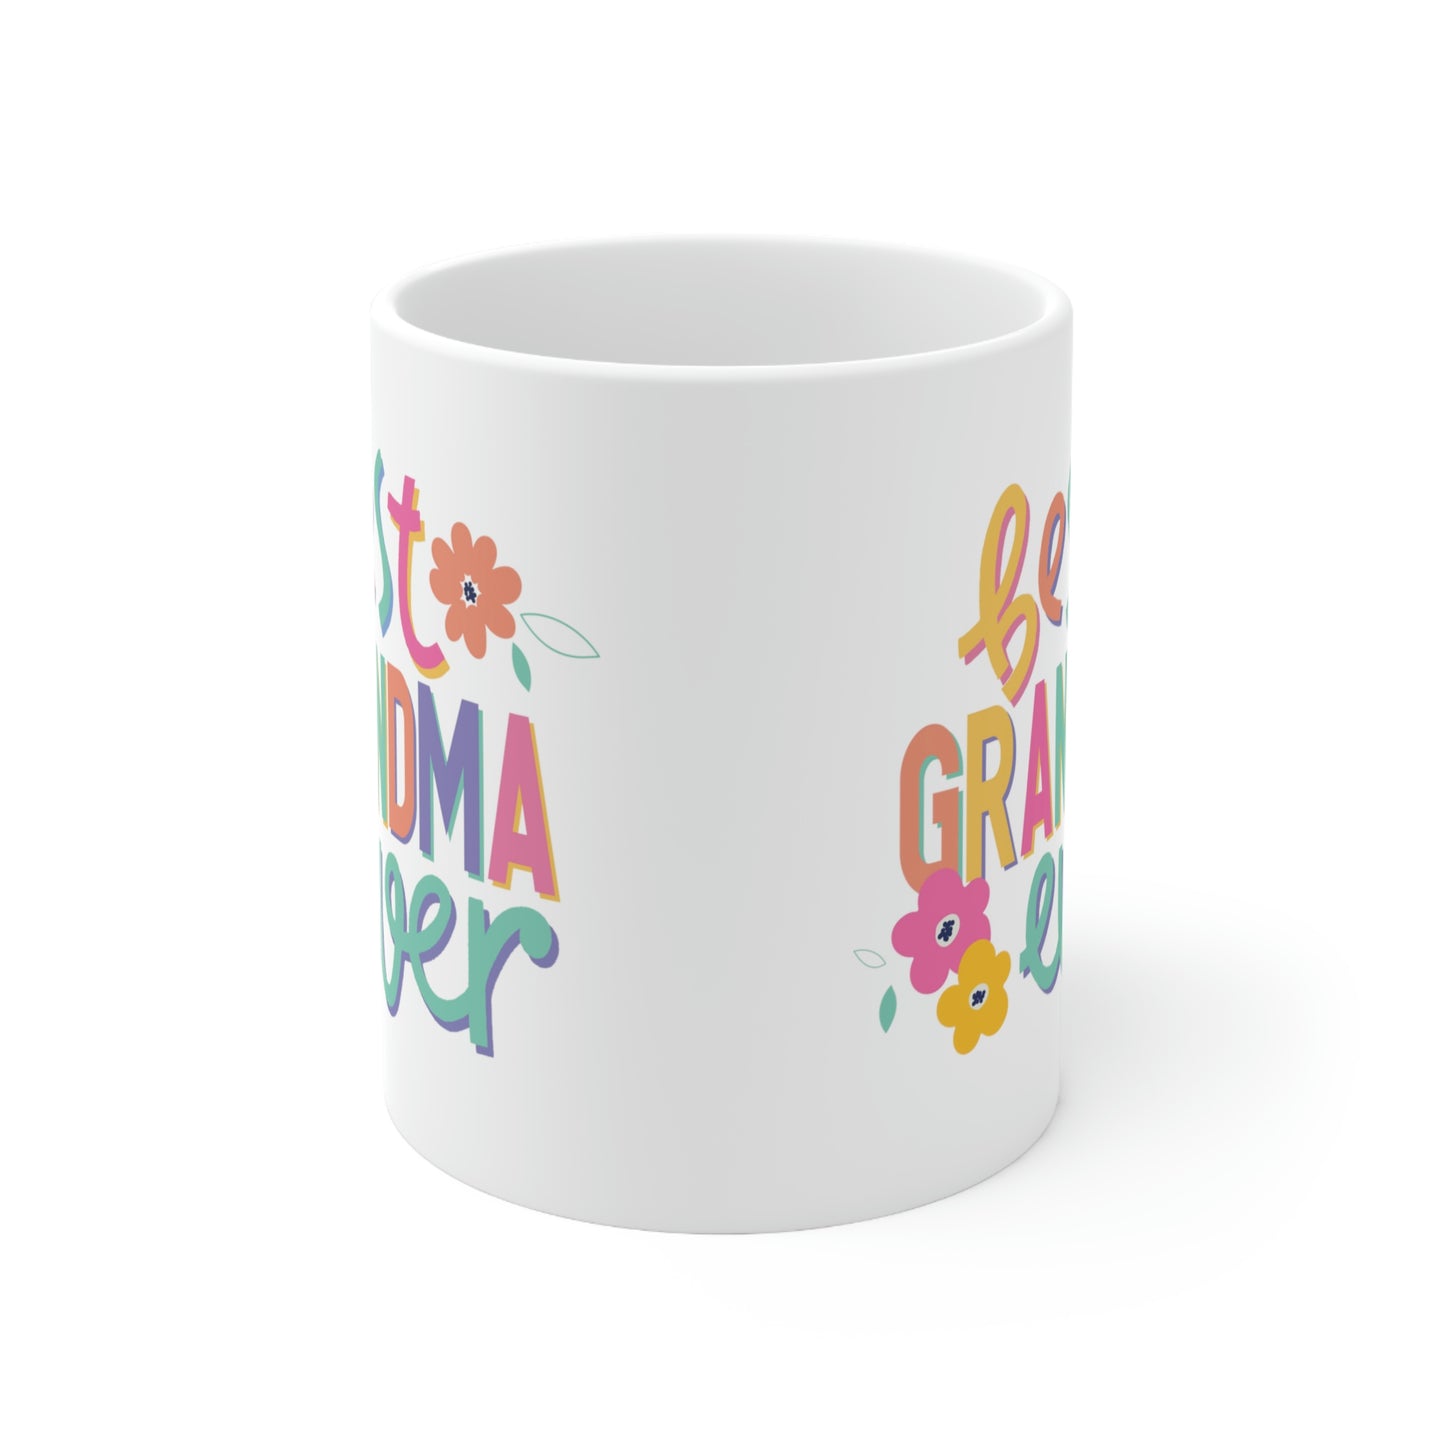 Best Grandma Ever Ceramic Mug 11oz, Mothers Day Gift